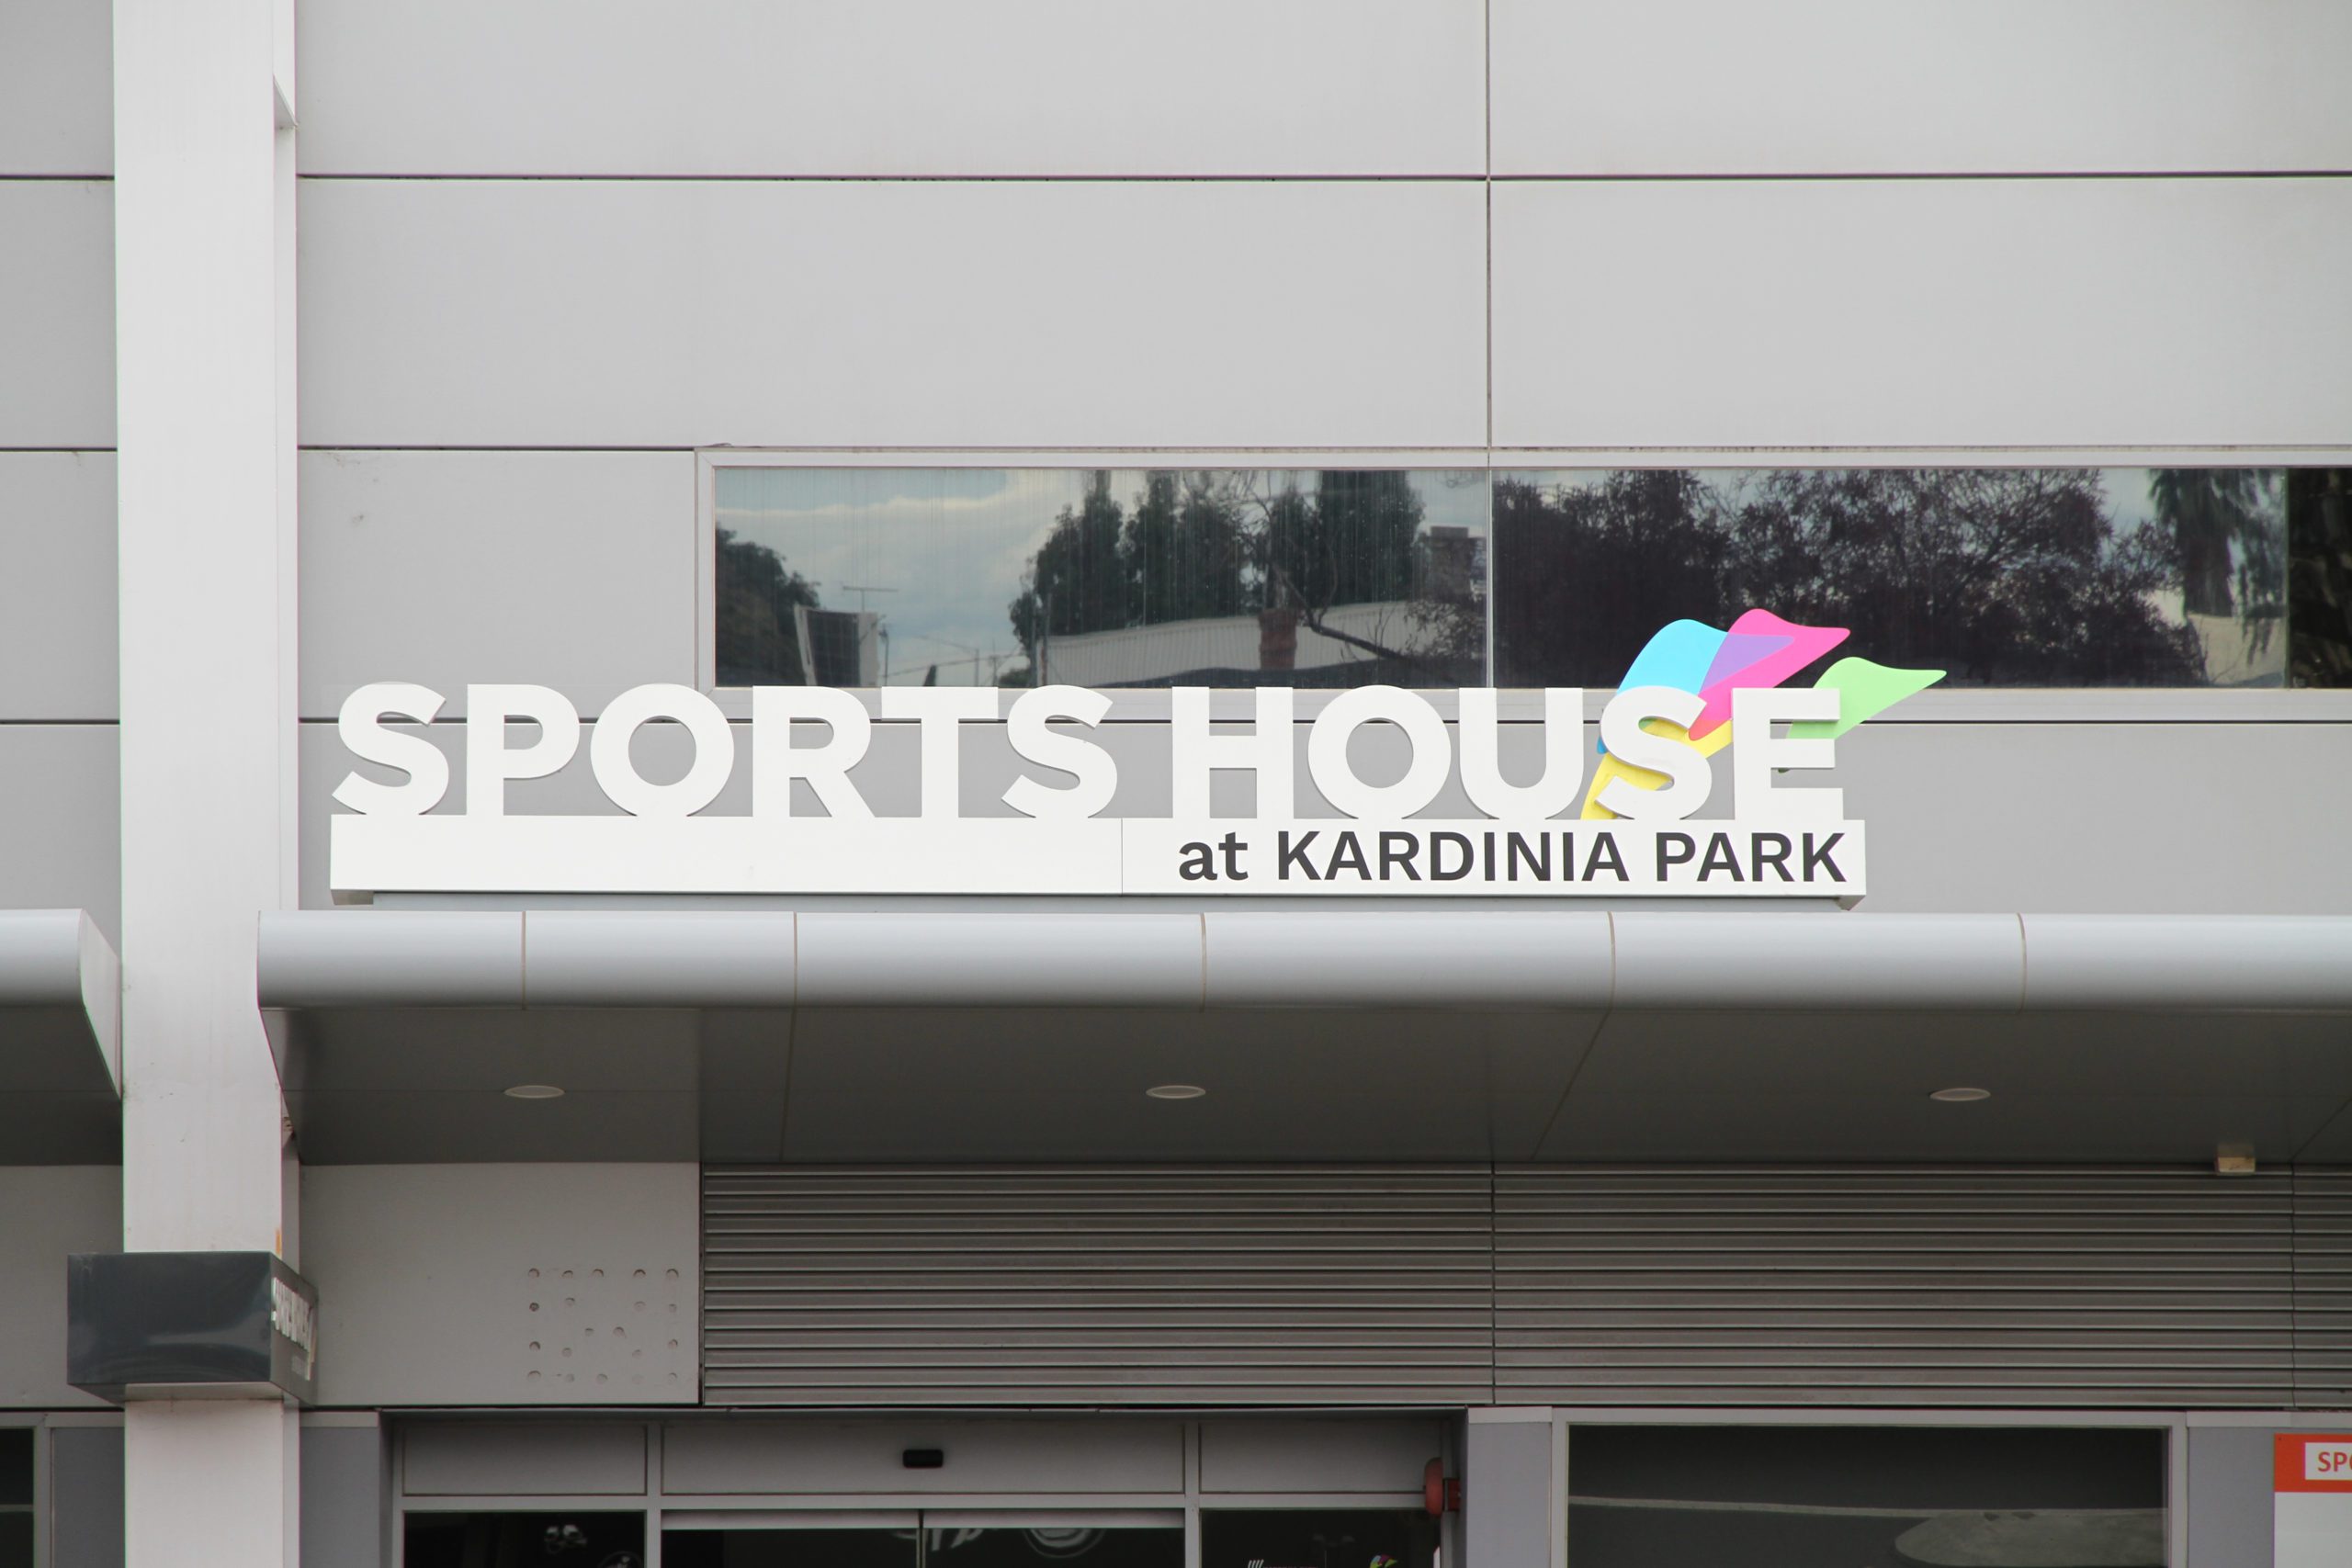 Signage at Kardinia Park Sports House